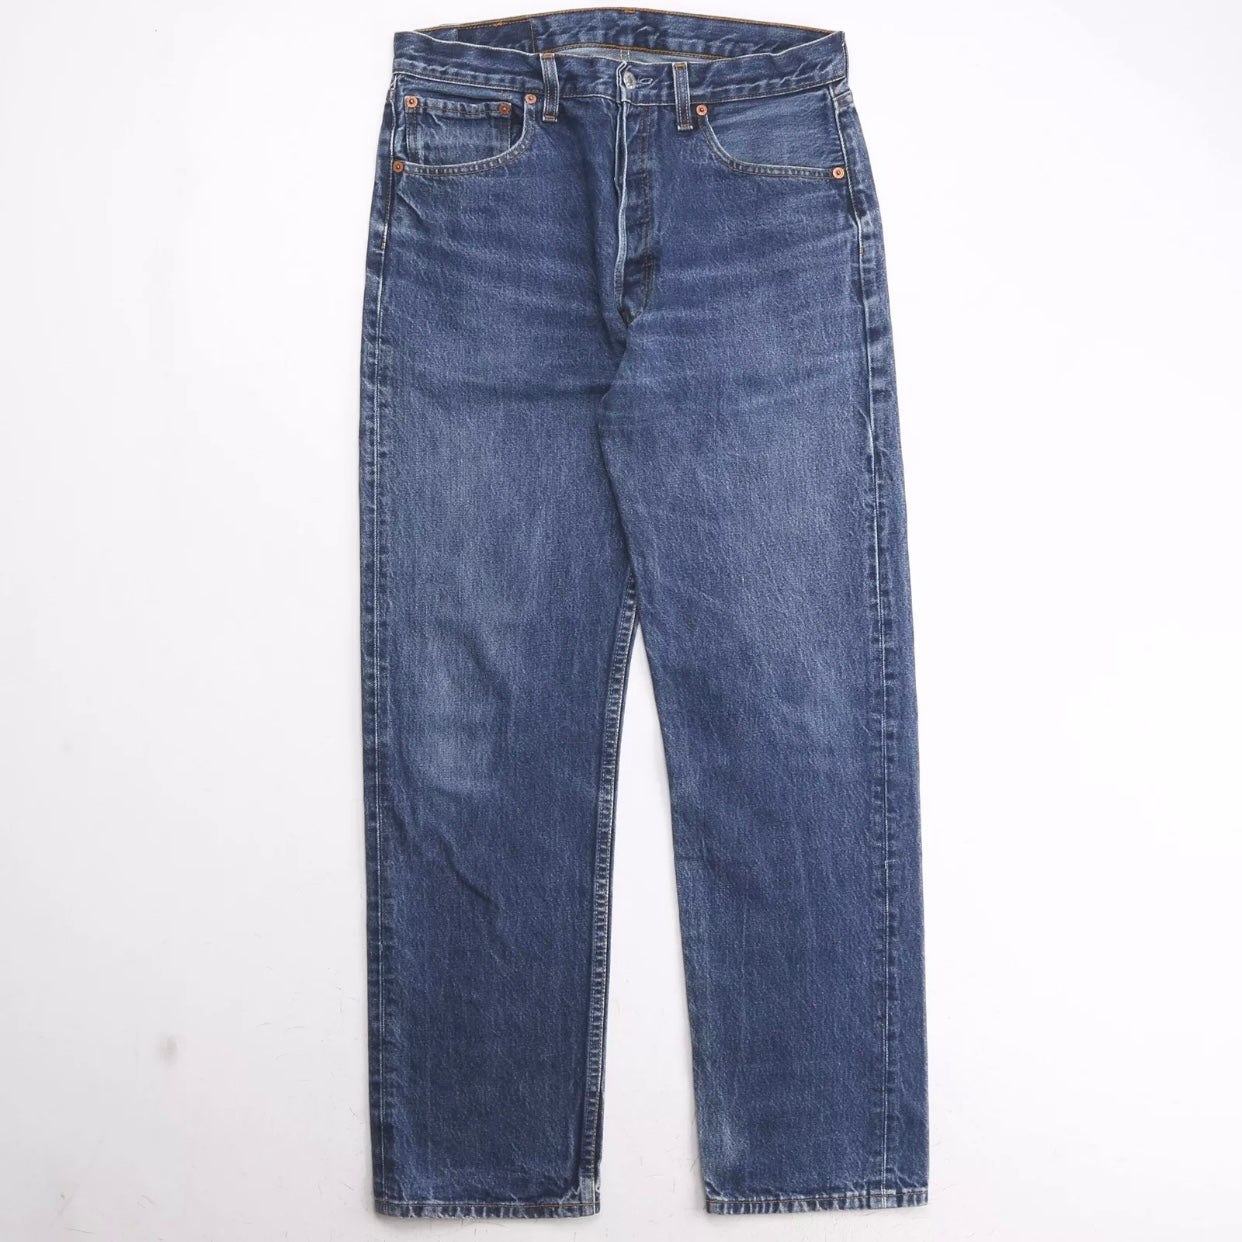 Vintage Levi’s 501’s - Mid blue wash waist 33 Leg 32